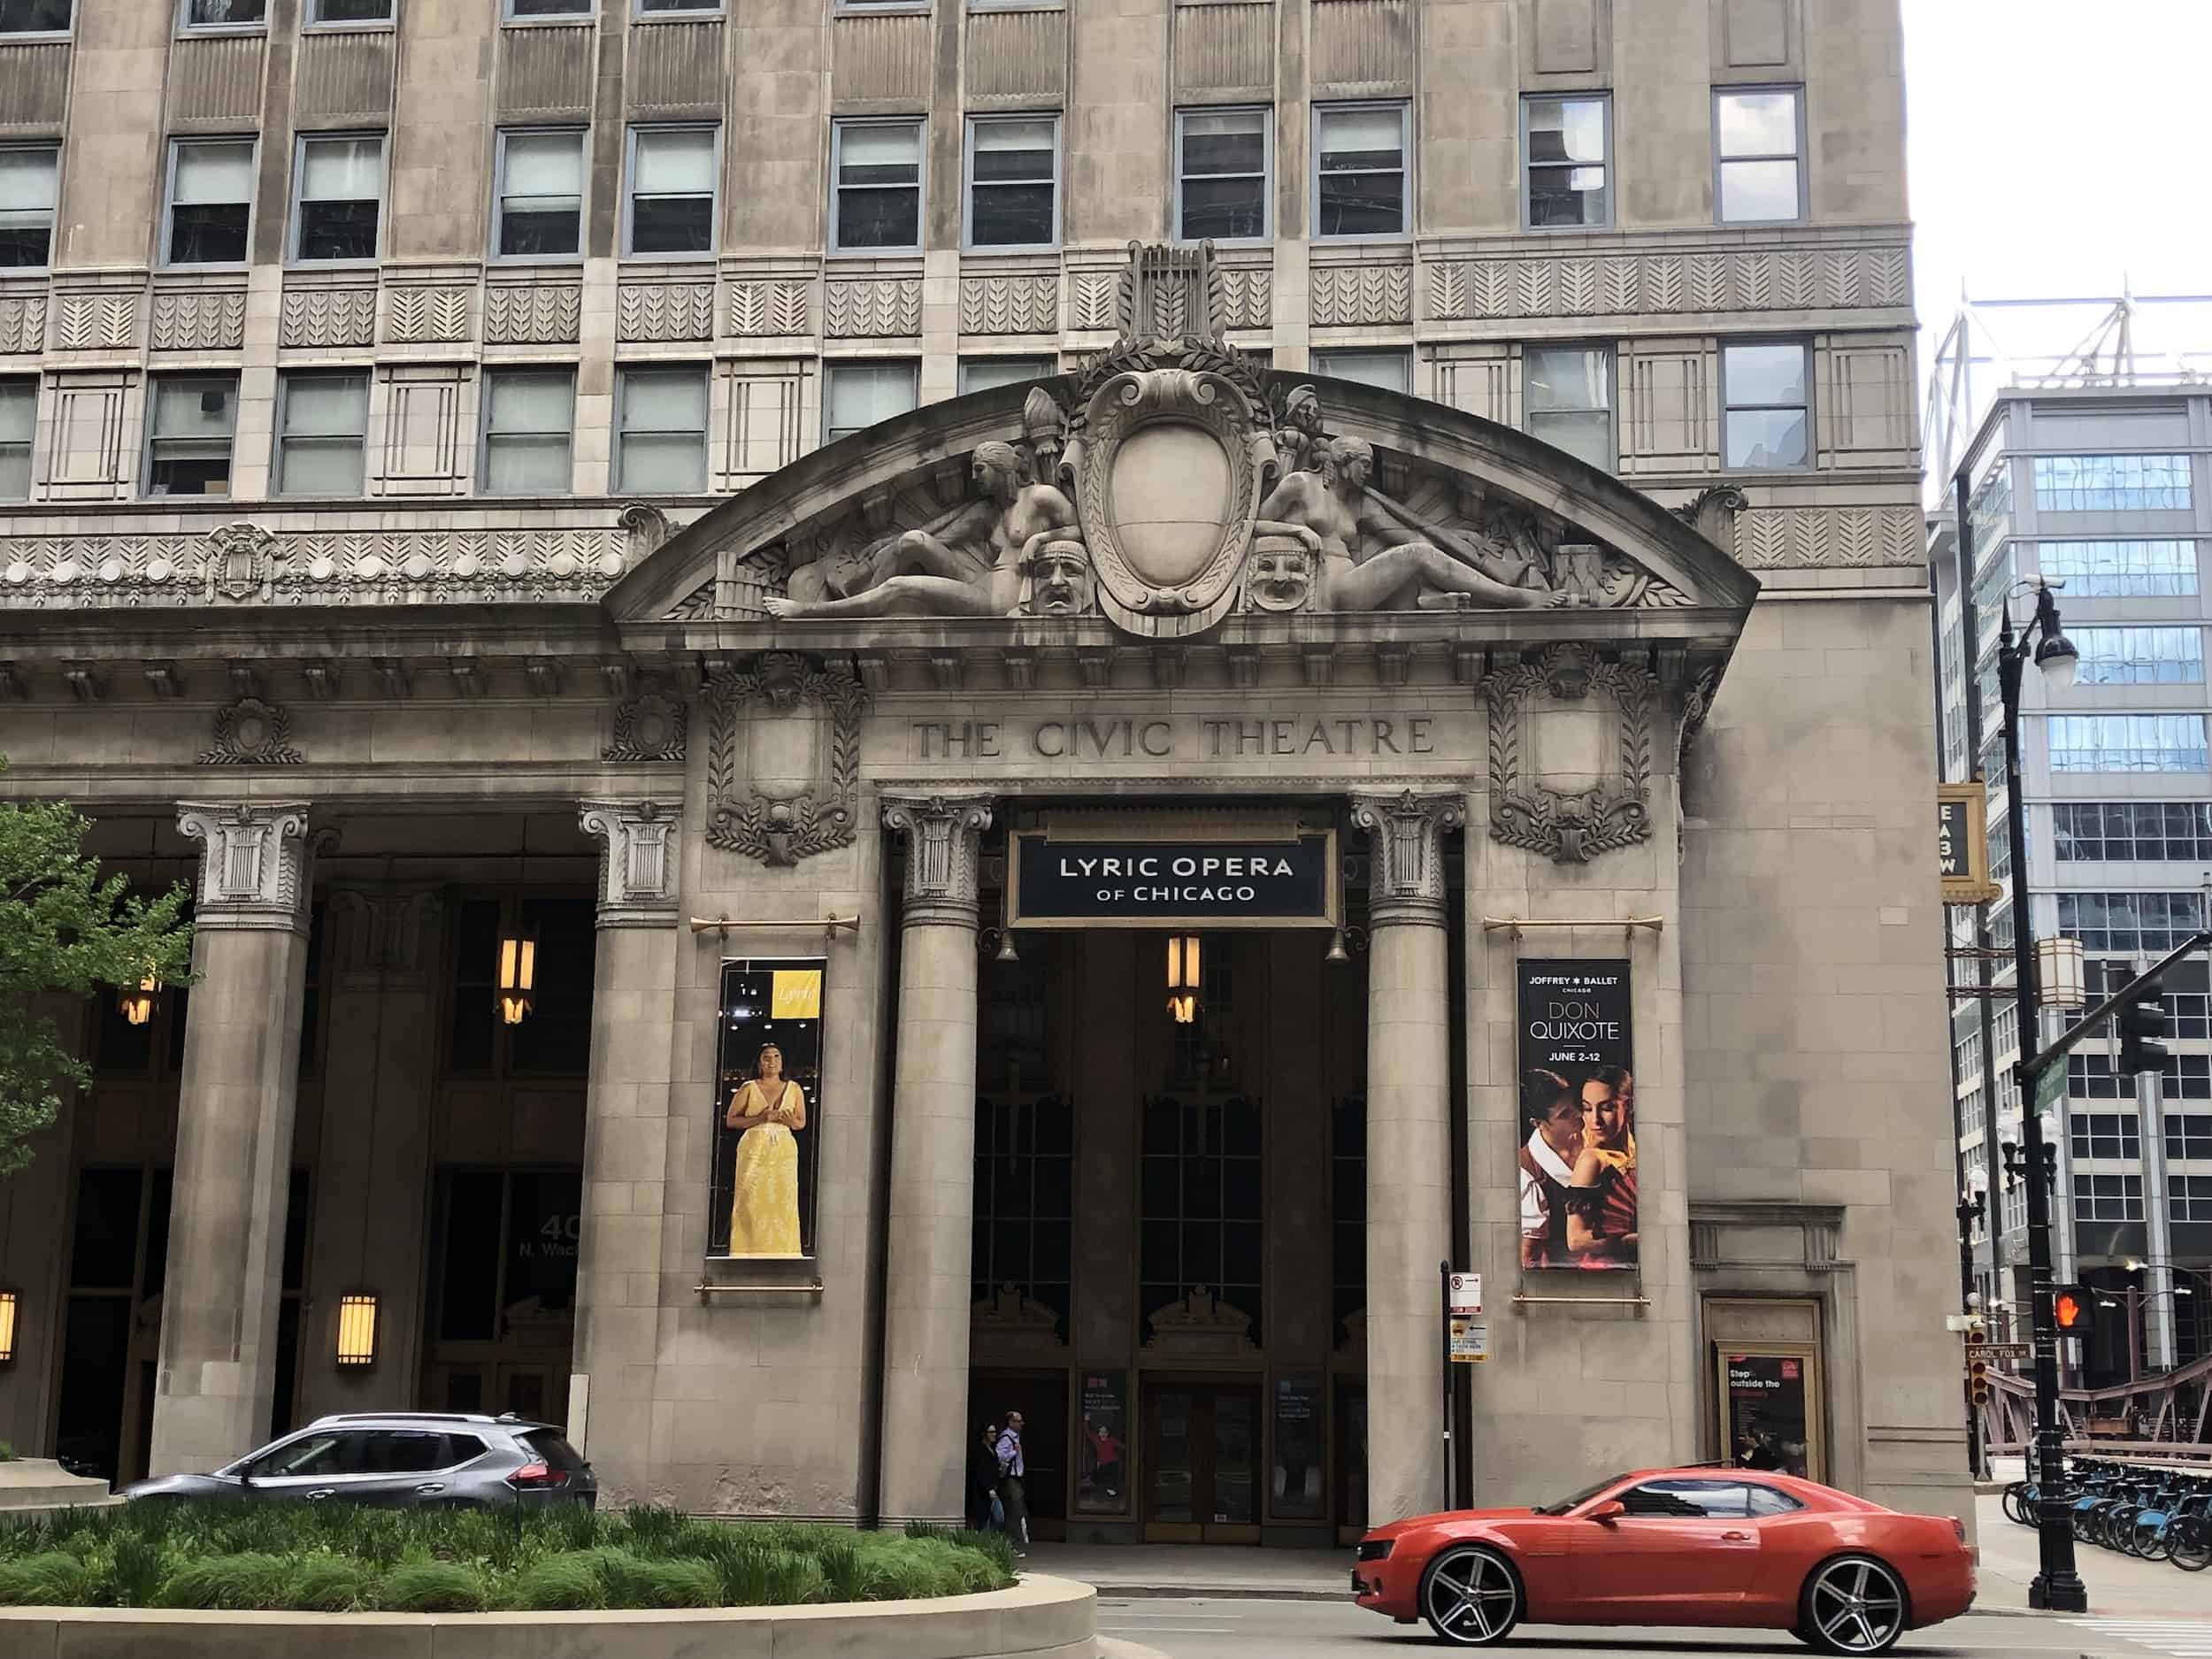 Civic Opera Building in Chicago, Illinois